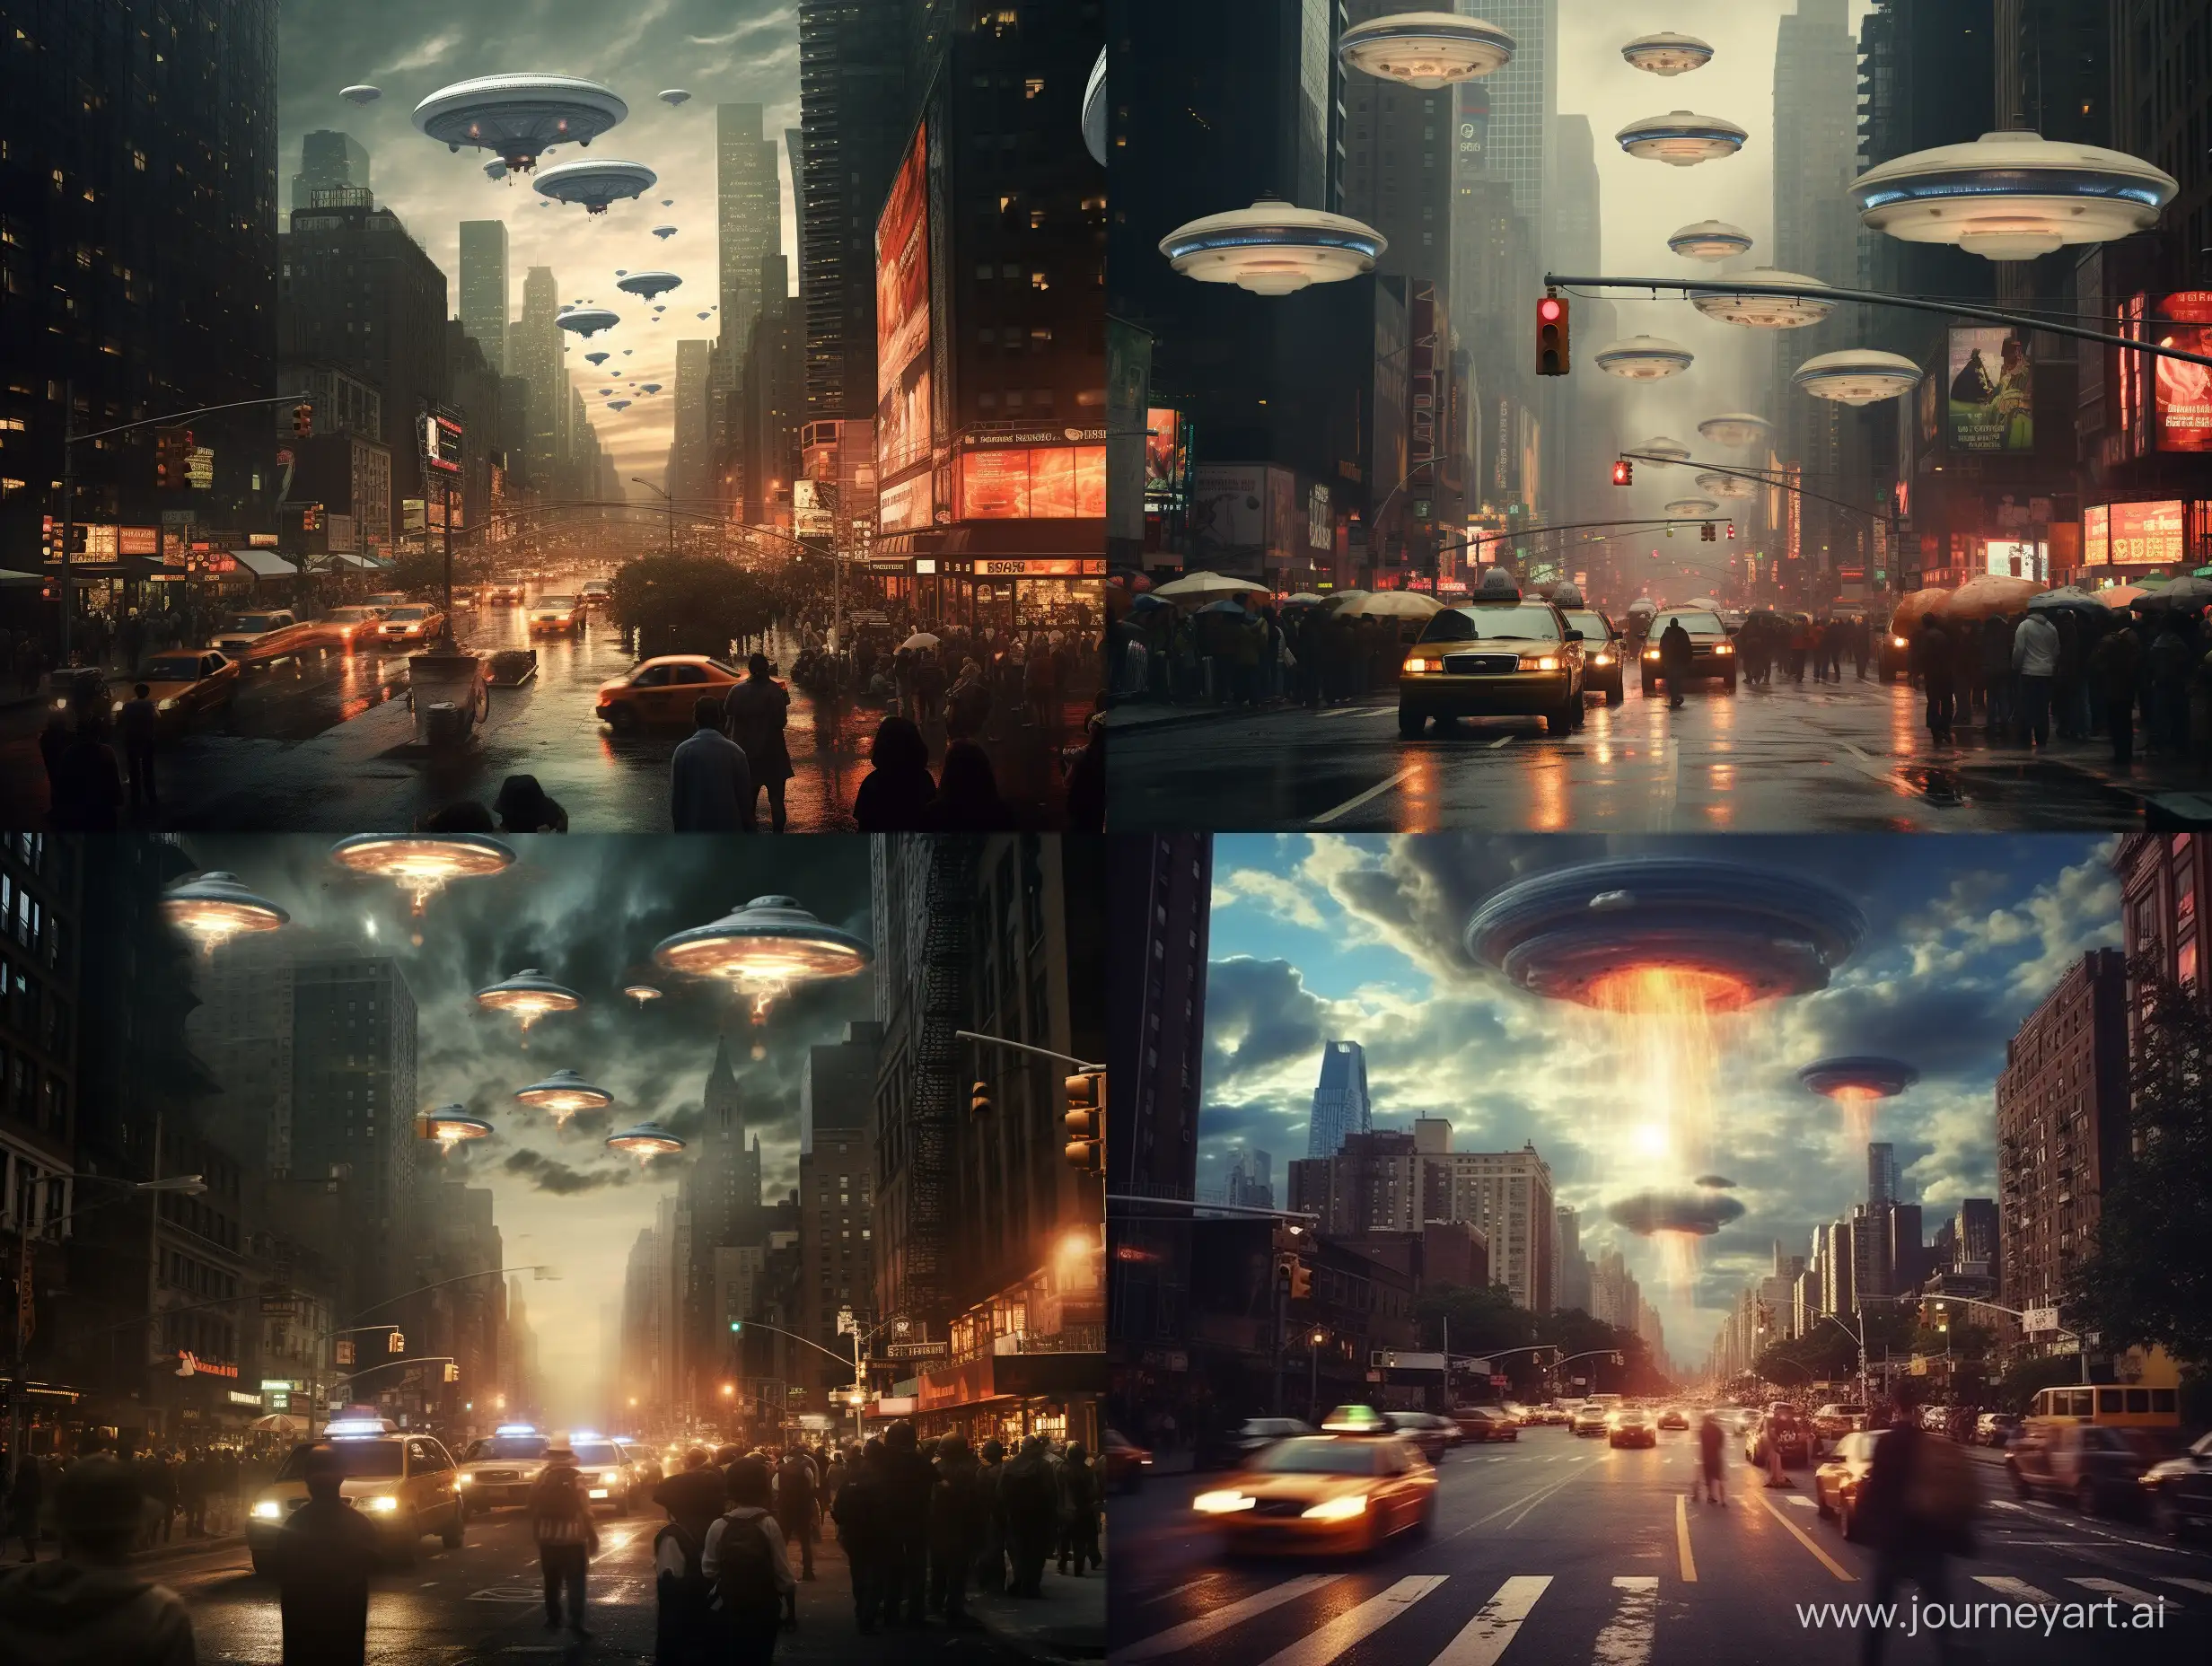  alien invasion in newyork city 